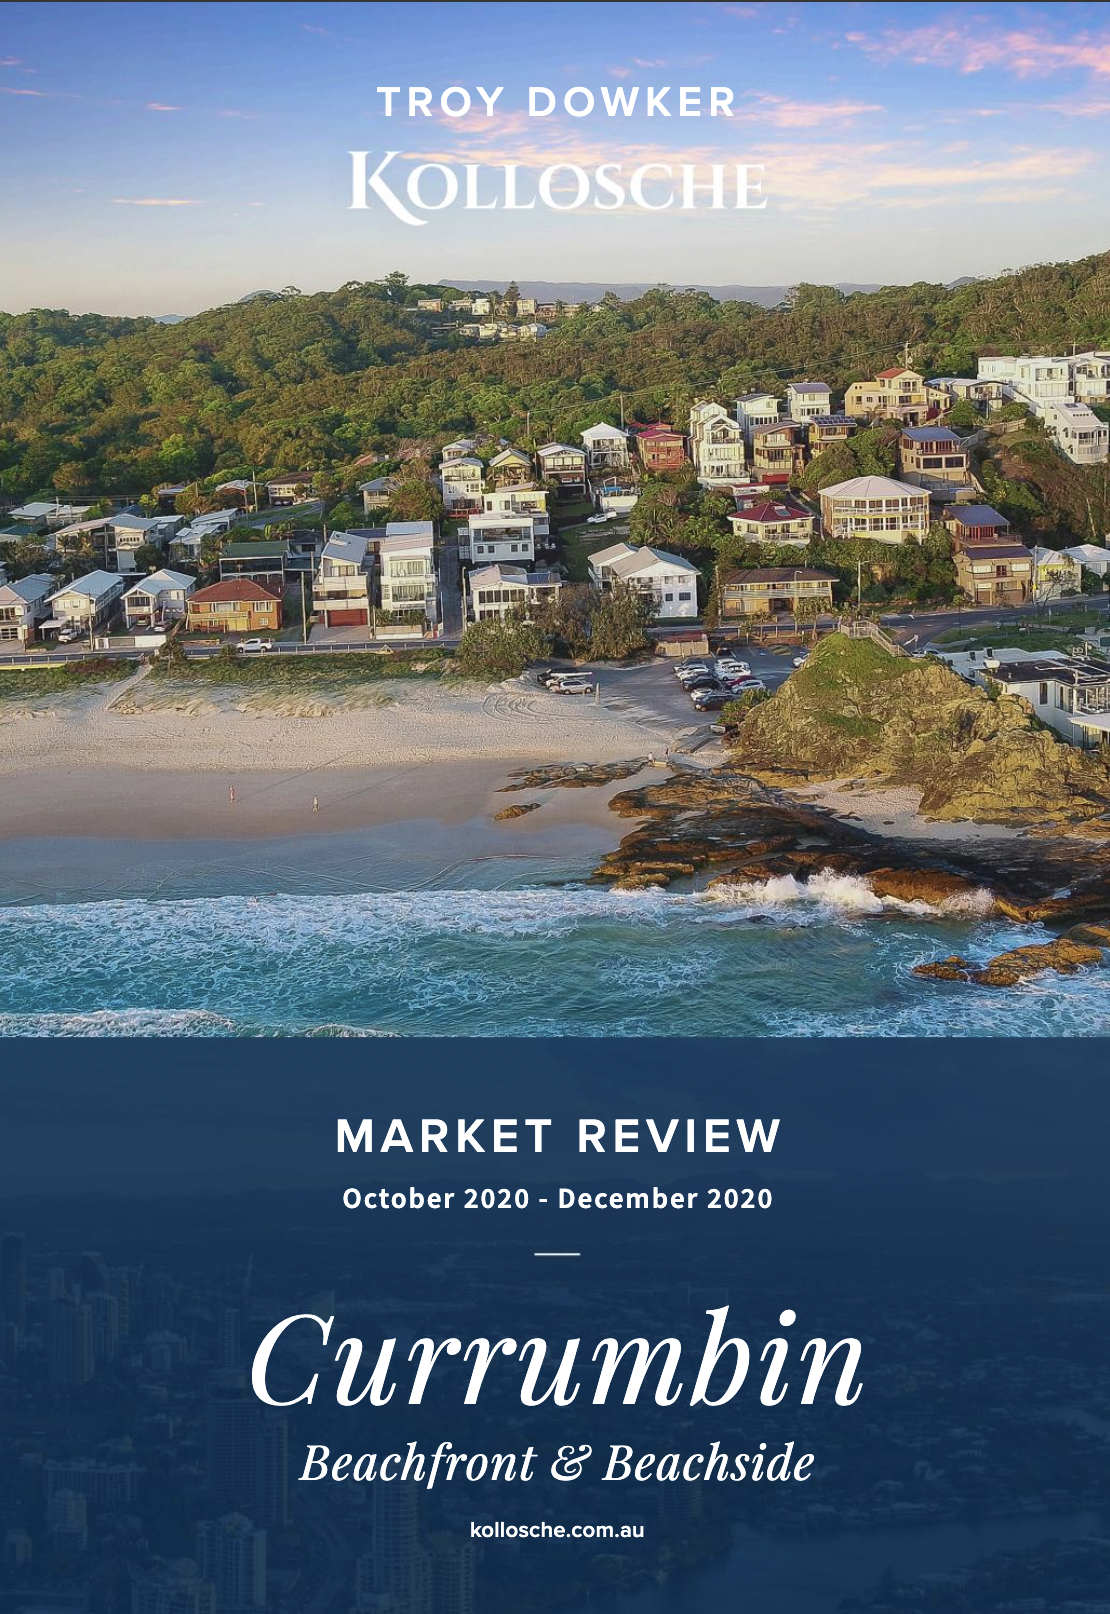 Currumbin Market Review | October-December 2020 | Troy Dowker – Kollosche